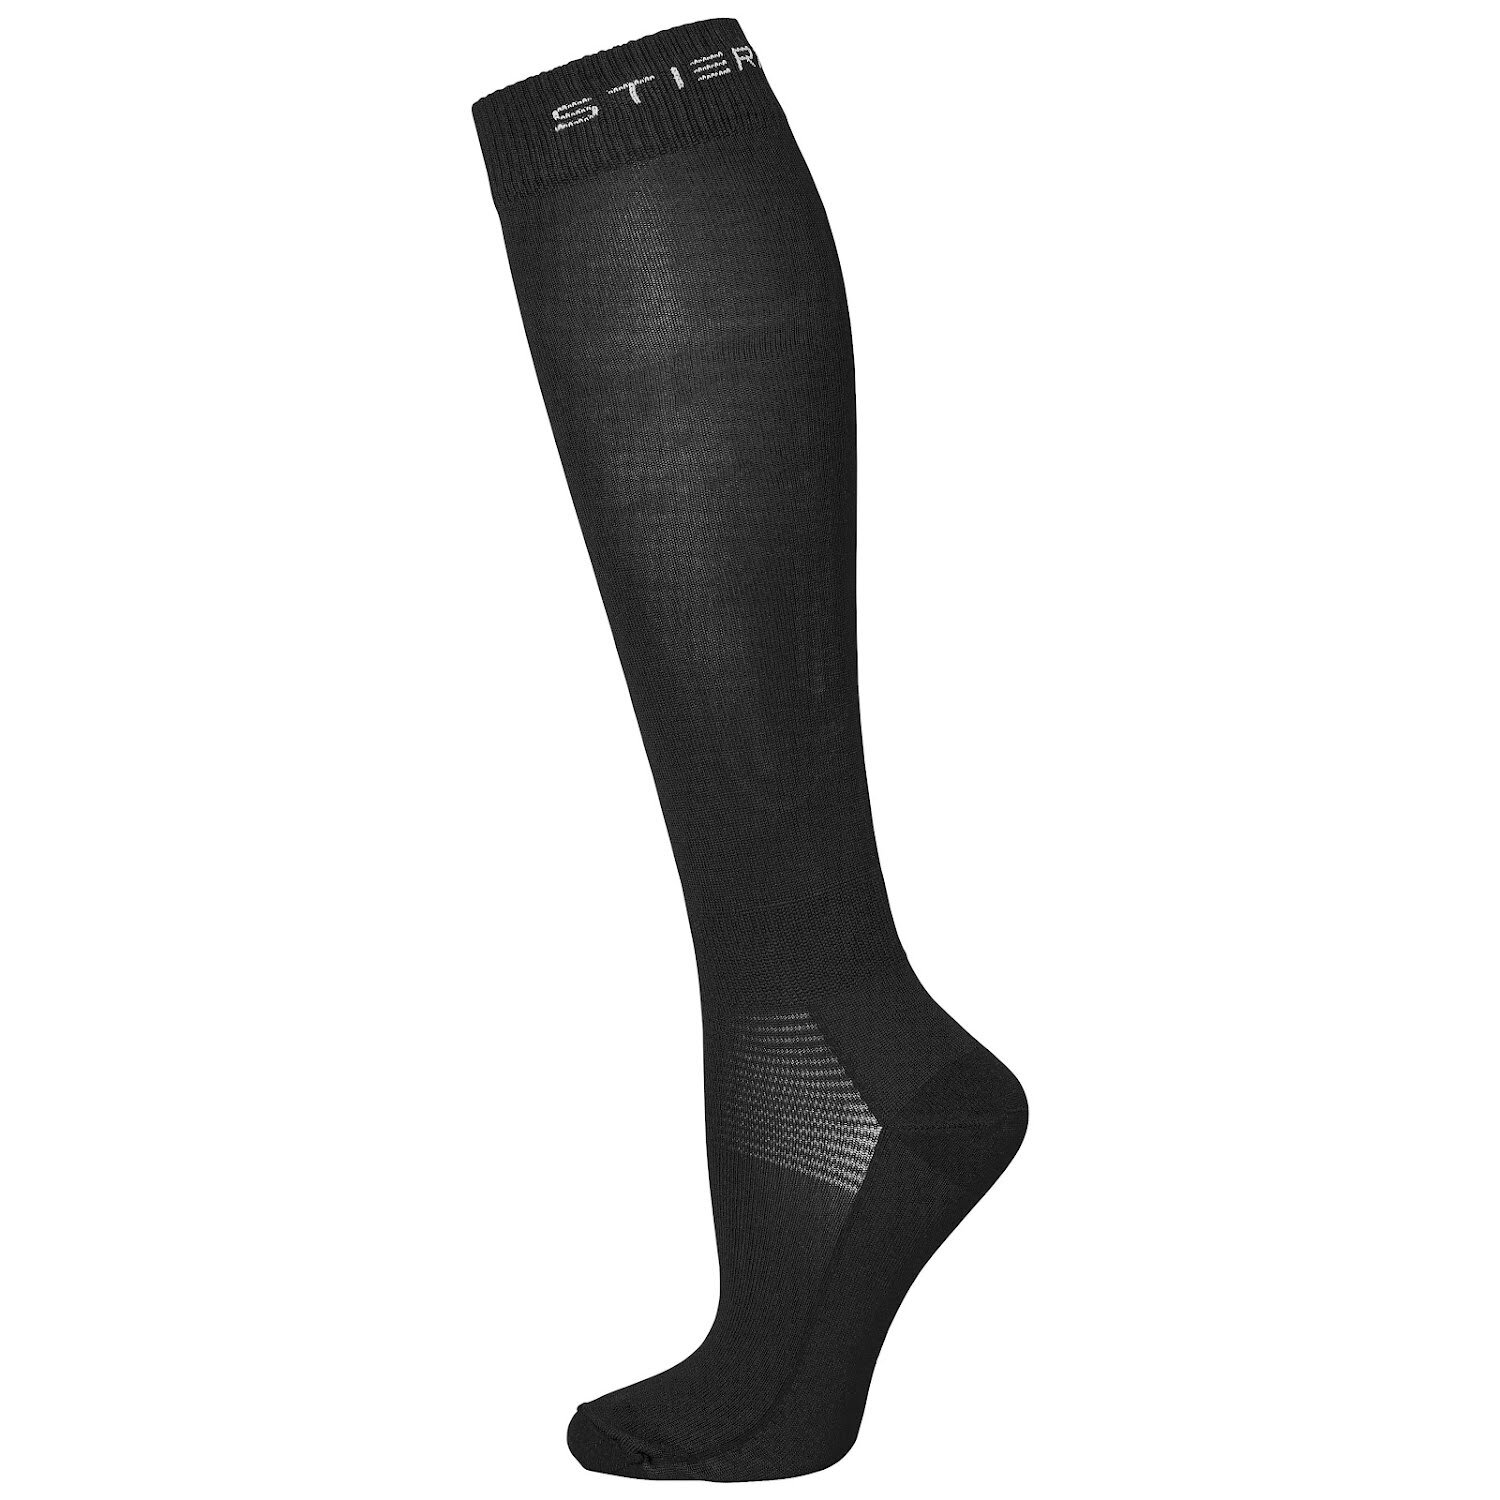 Thin Competition Socks - Black